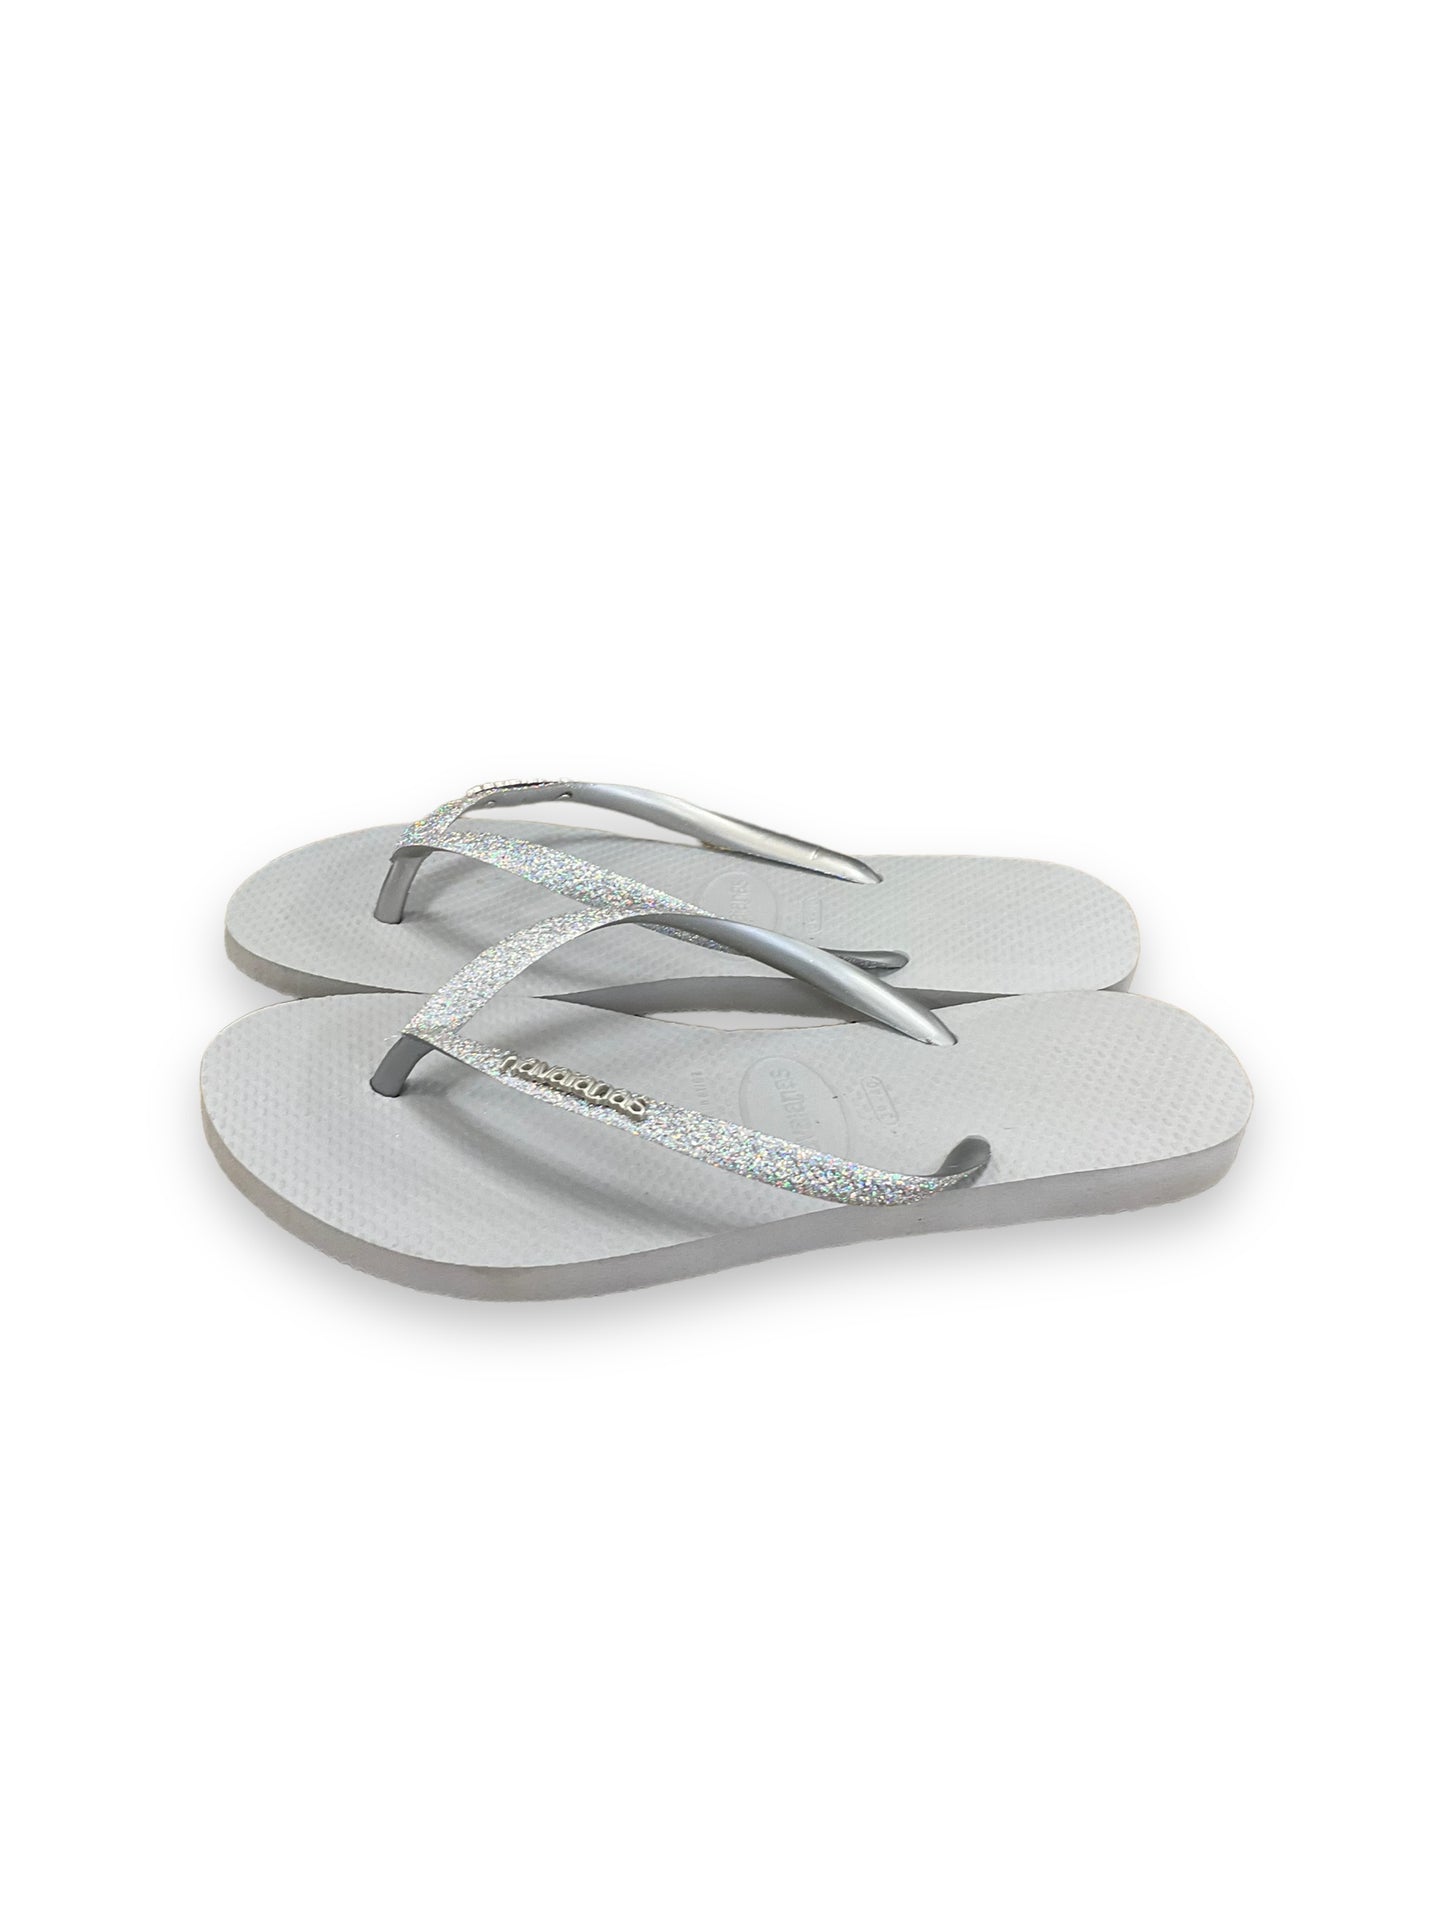 Sandals Flip Flops By Havaianas  Size: 9.5